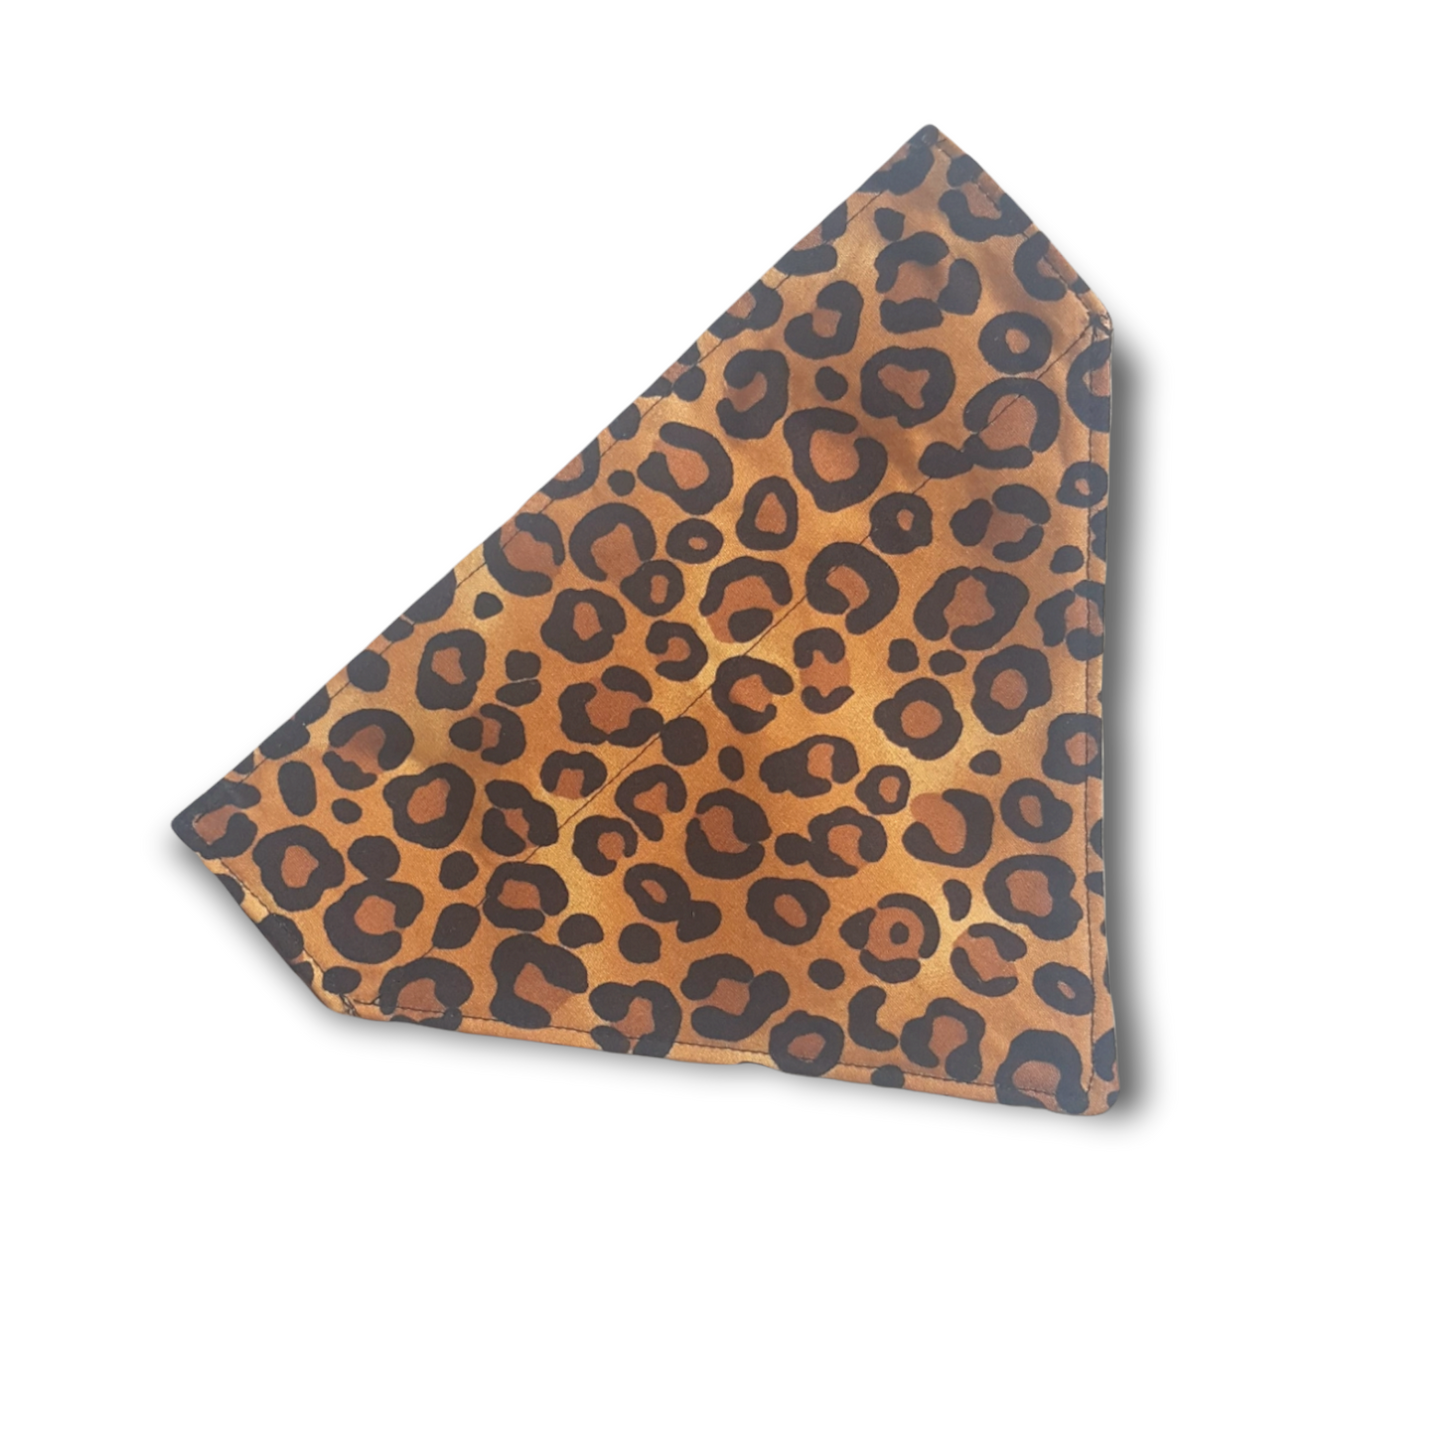 Leopard print dog bandana